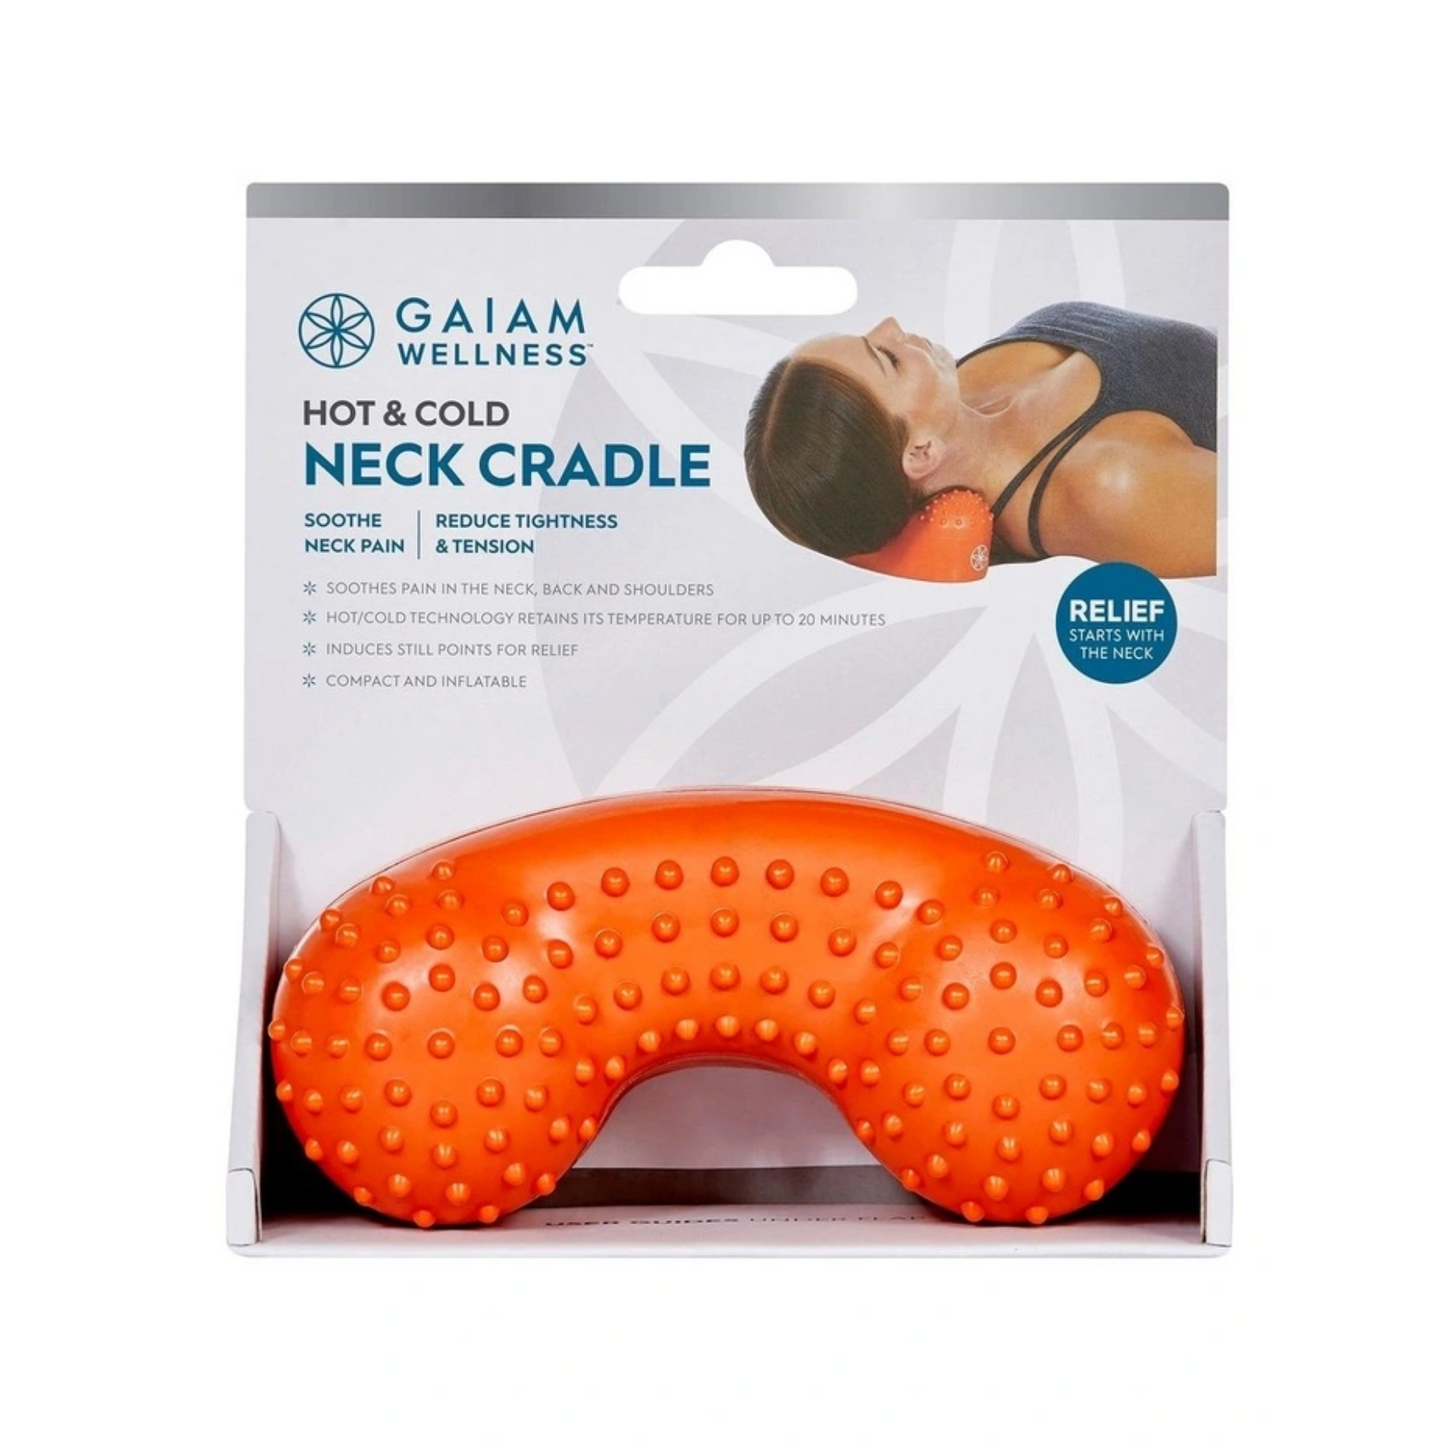 Gaiam Wellness Hot & Cold Neck Cradle, Reduce Tightness & Tension